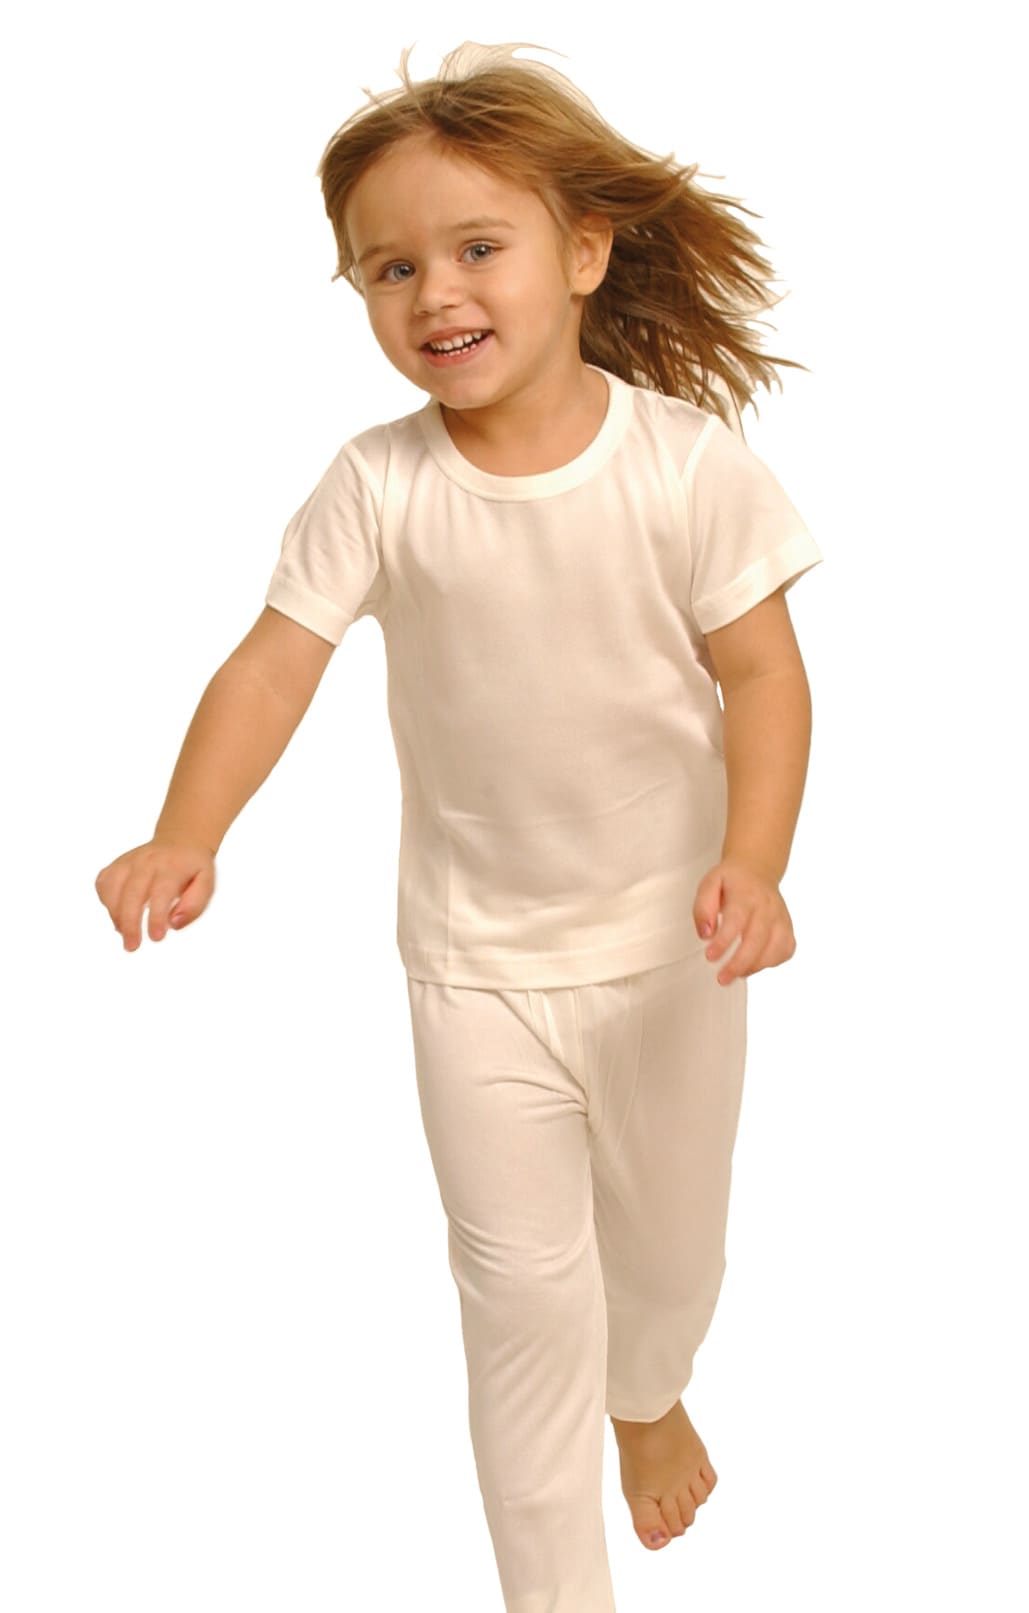 barn-trika-tshirt-vit